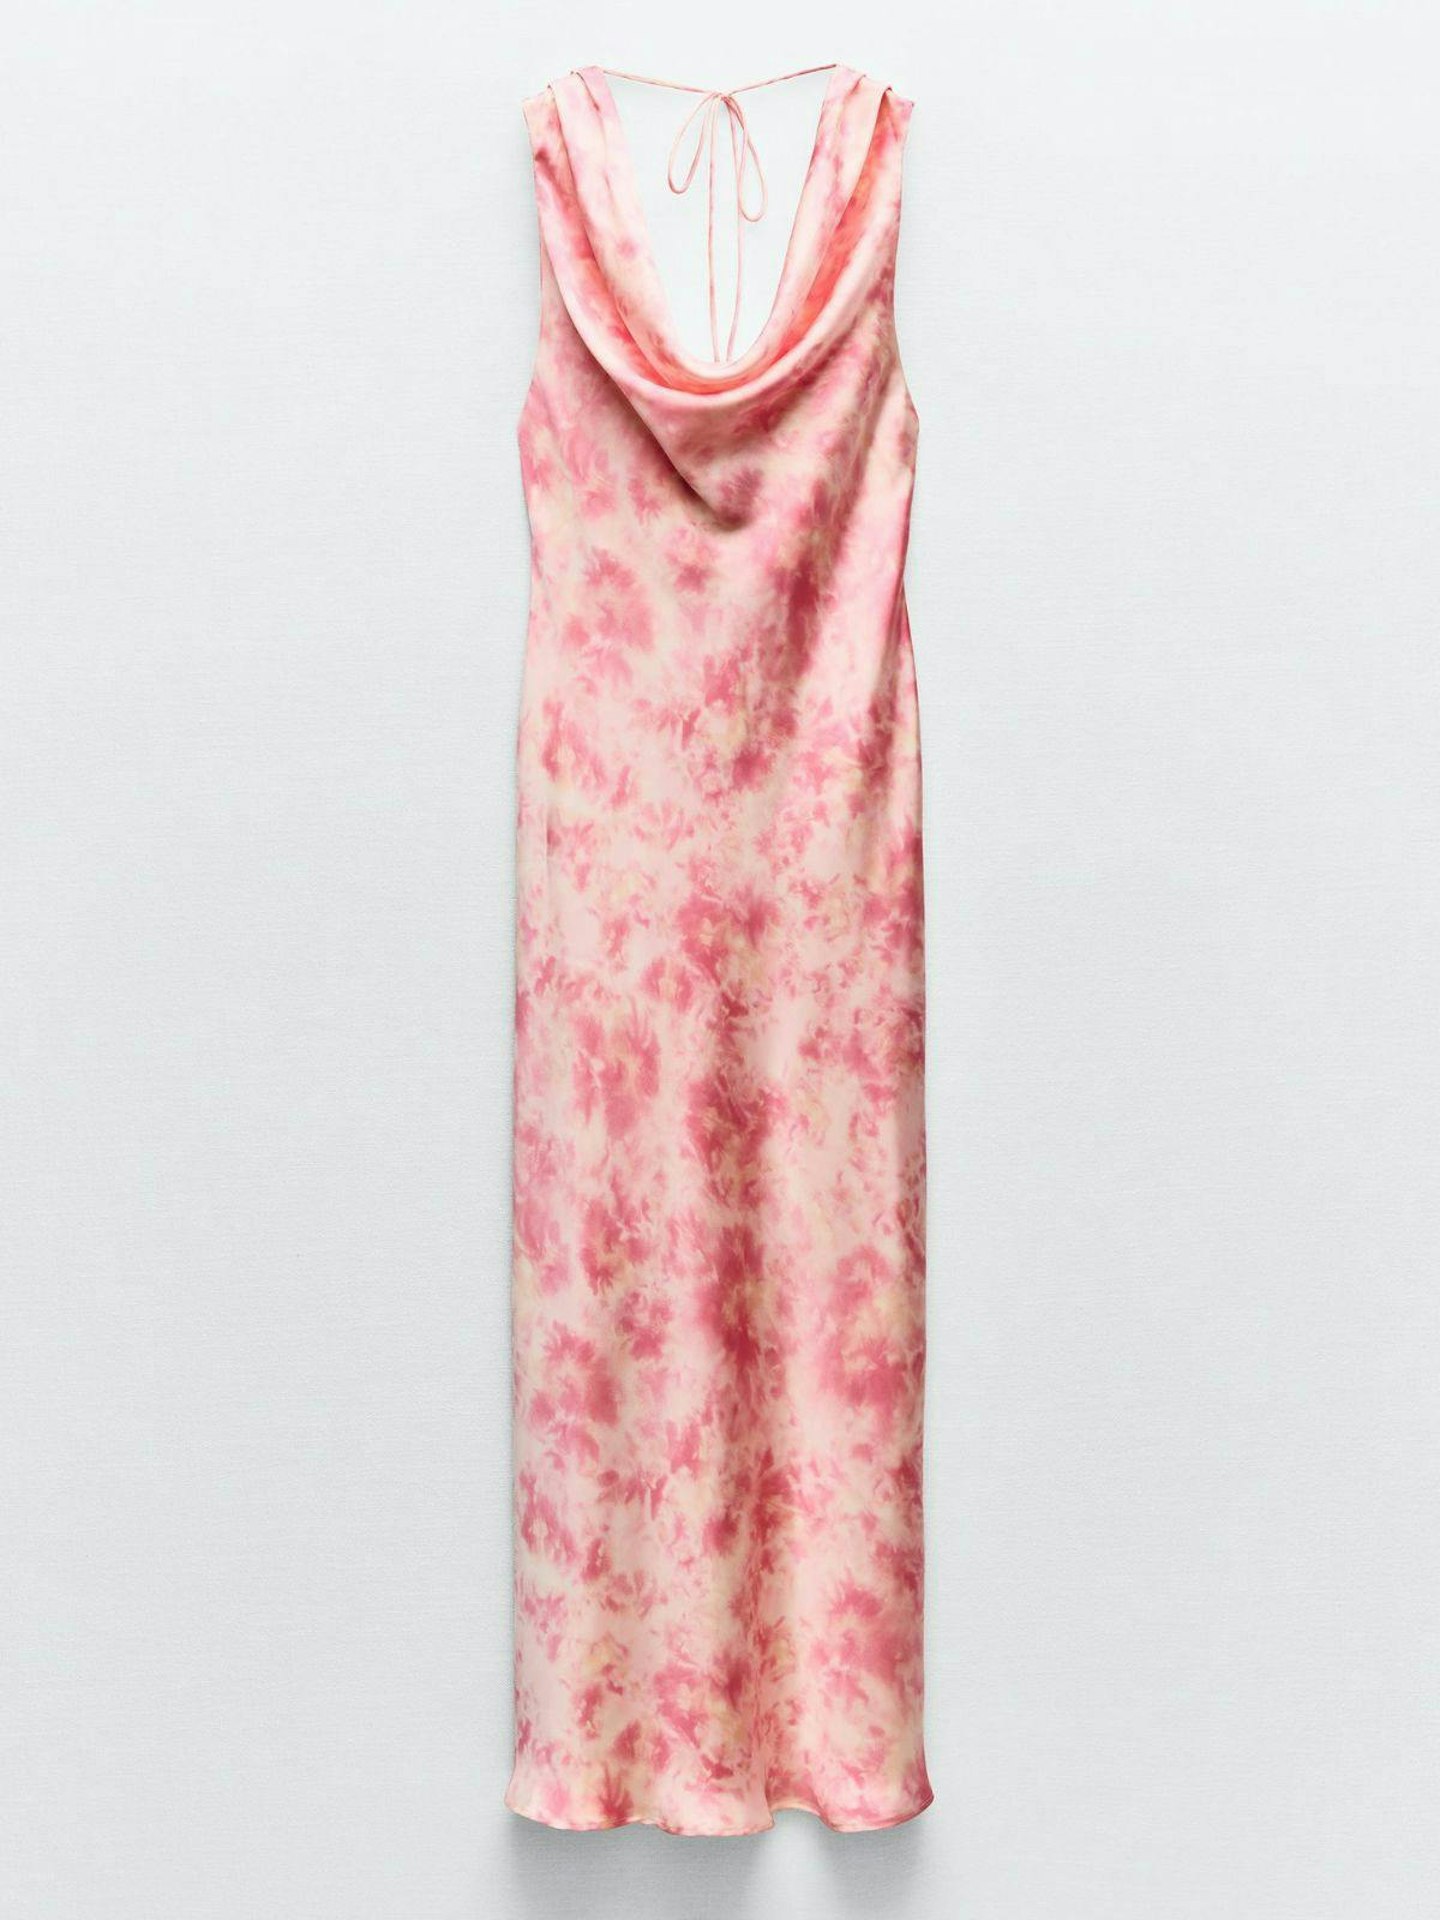 Zara Satin Tie-Dye Print Dress